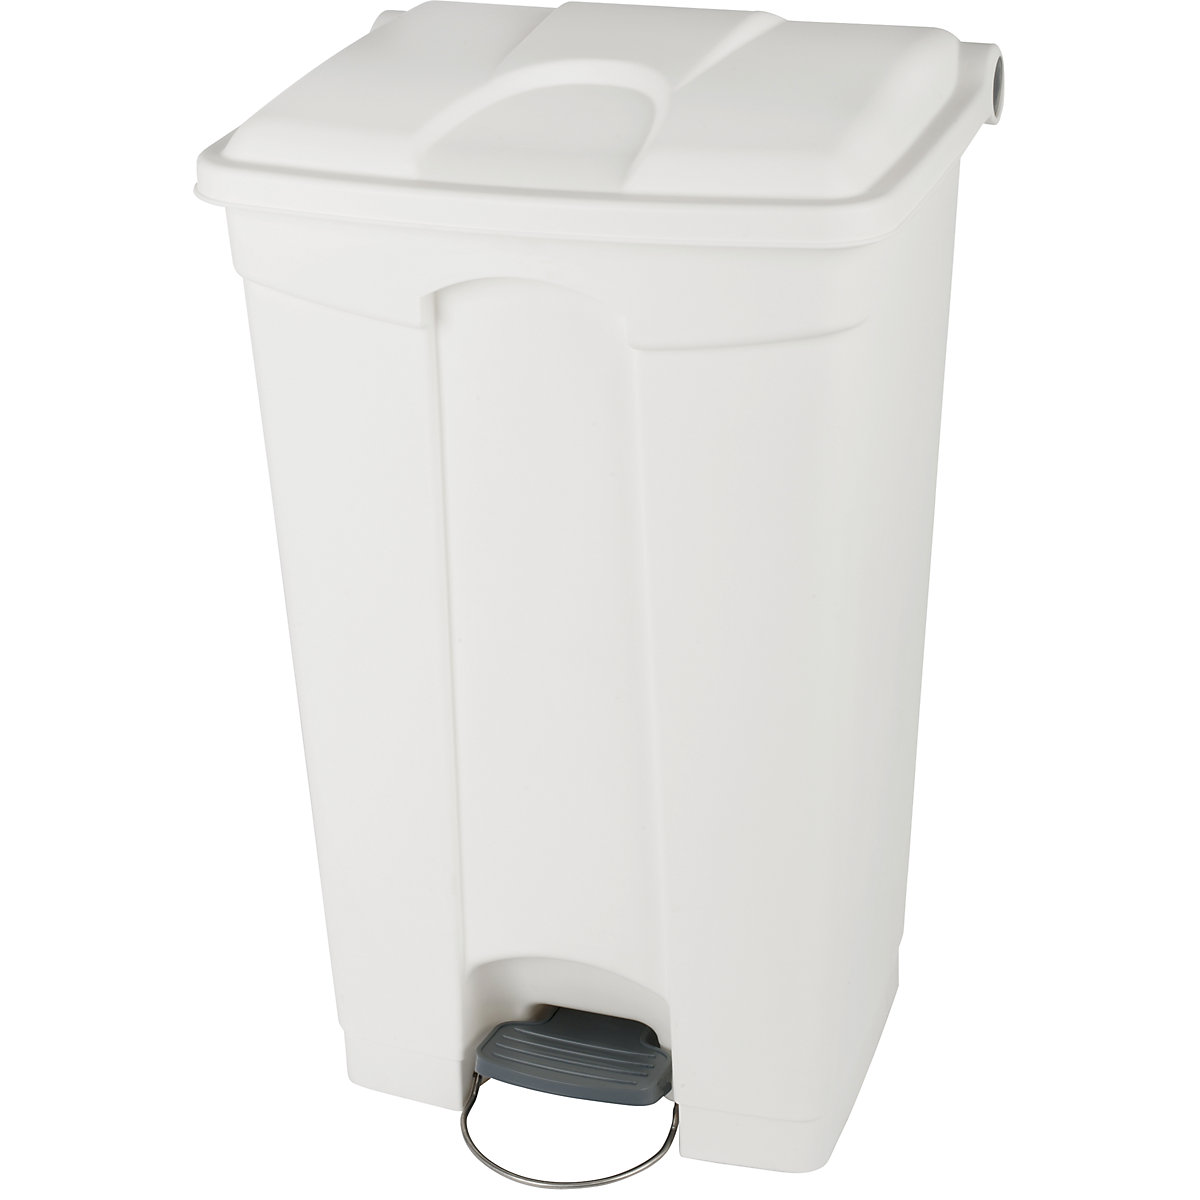 EUROKRAFTbasic – Pedal waste collector, capacity 90 l, WxHxD 505 x 790 x 410 mm, white